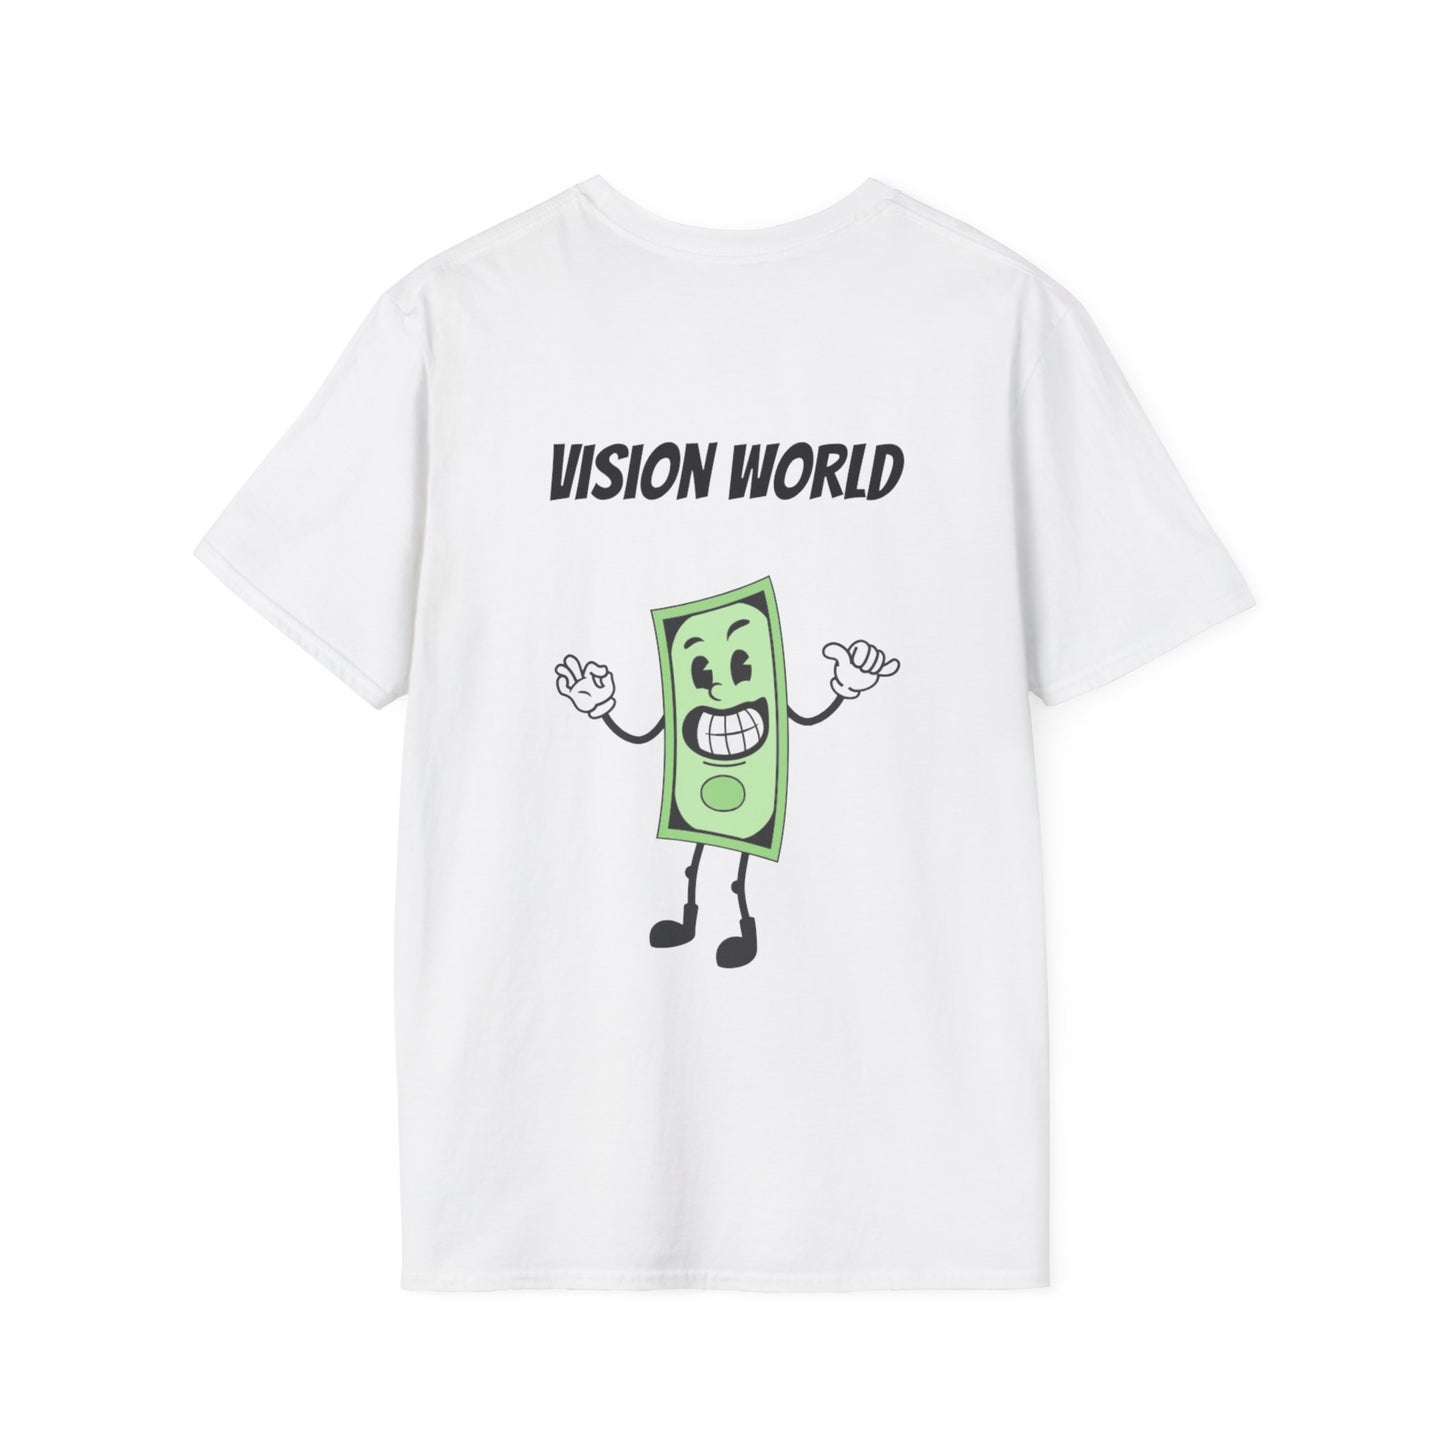 Vision World Money Themed Shirt